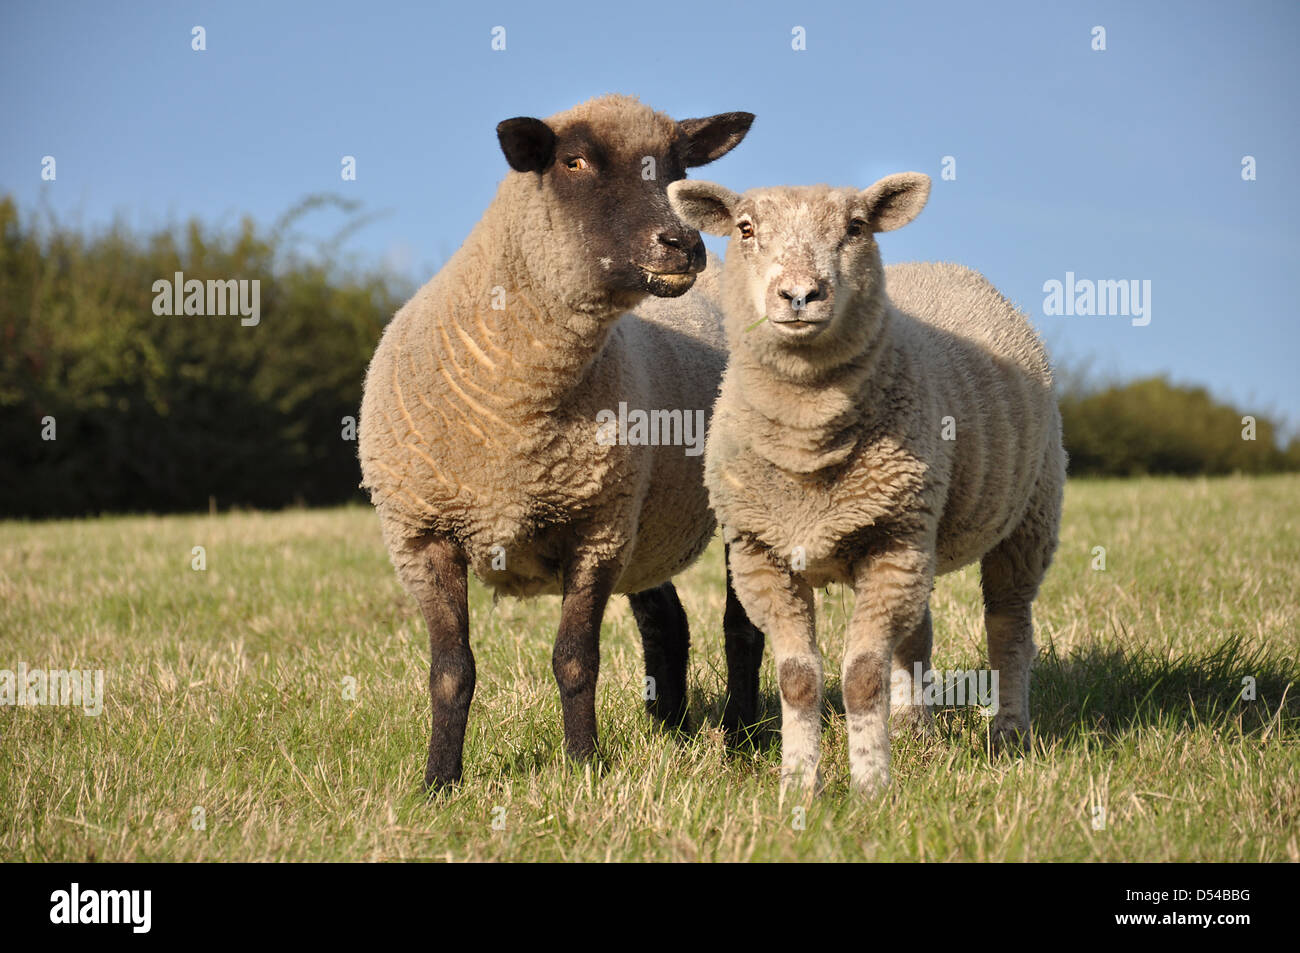 sheep, baby, animals, couple, love, family, face, nose, wool, farm animals, mammals, farm, eyes, ears, fur, fauna, flora, grass, Stock Photo